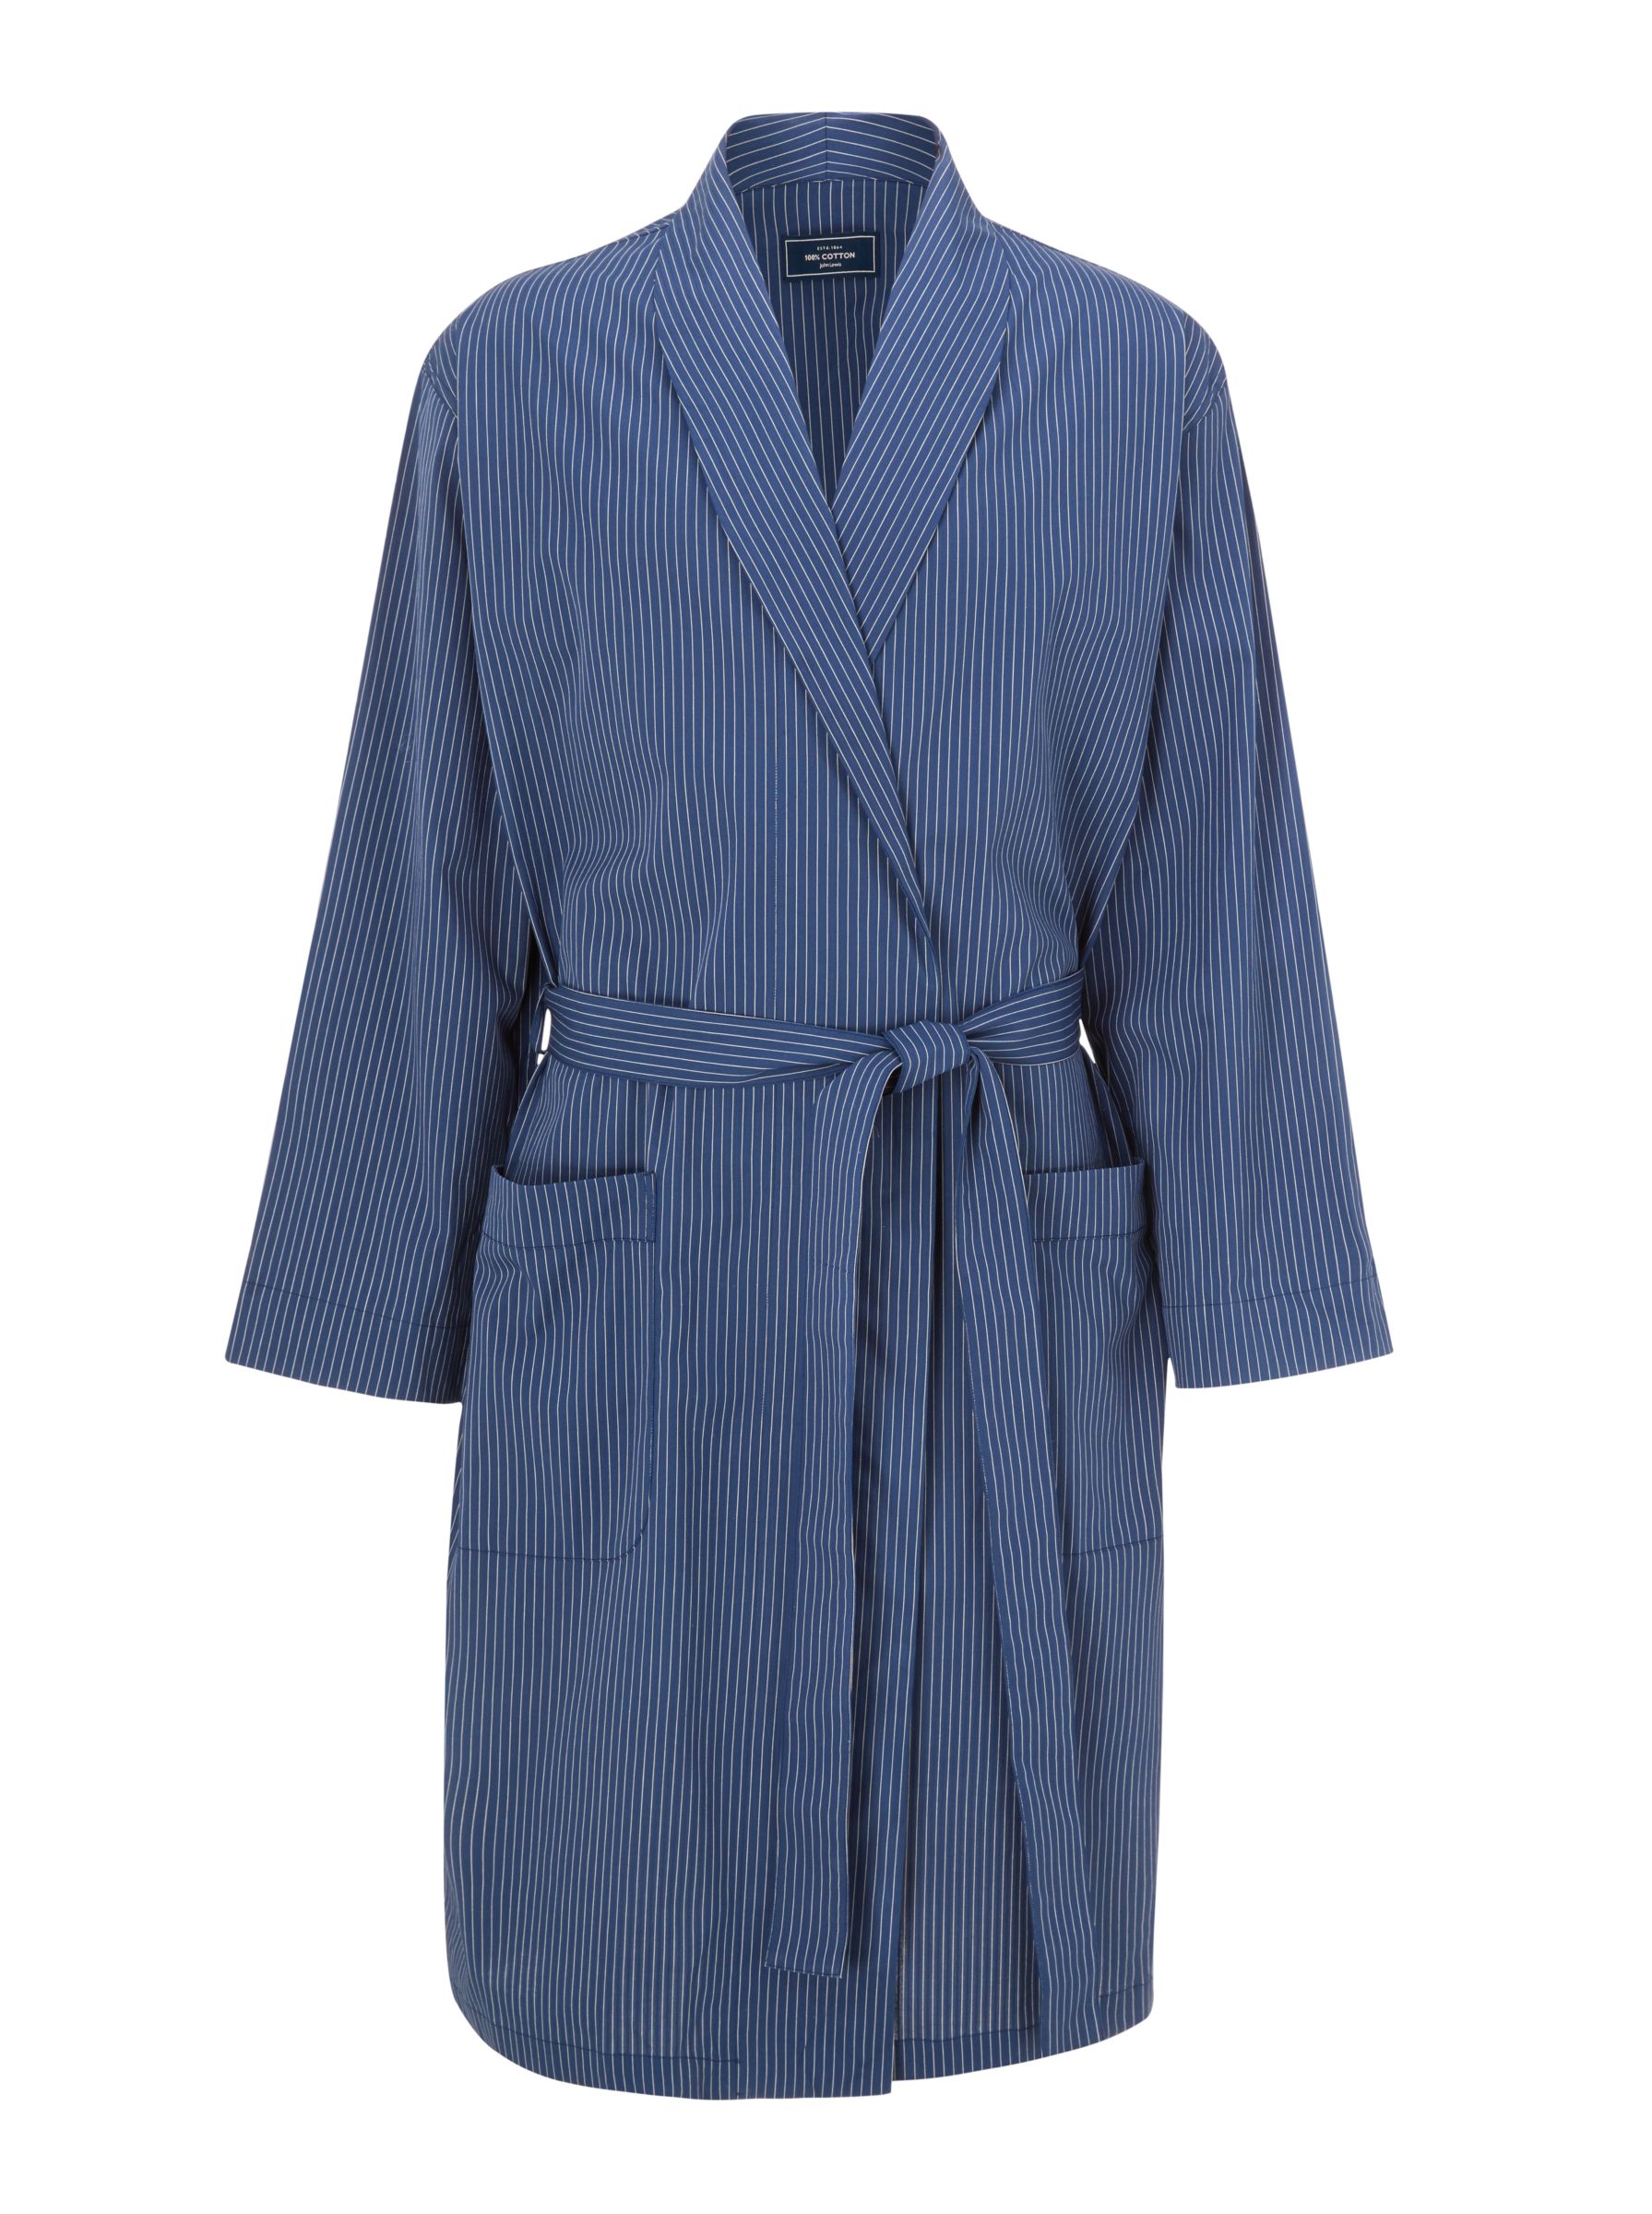 John Lewis & Partners Pinstripe Dressing Gown, Blue